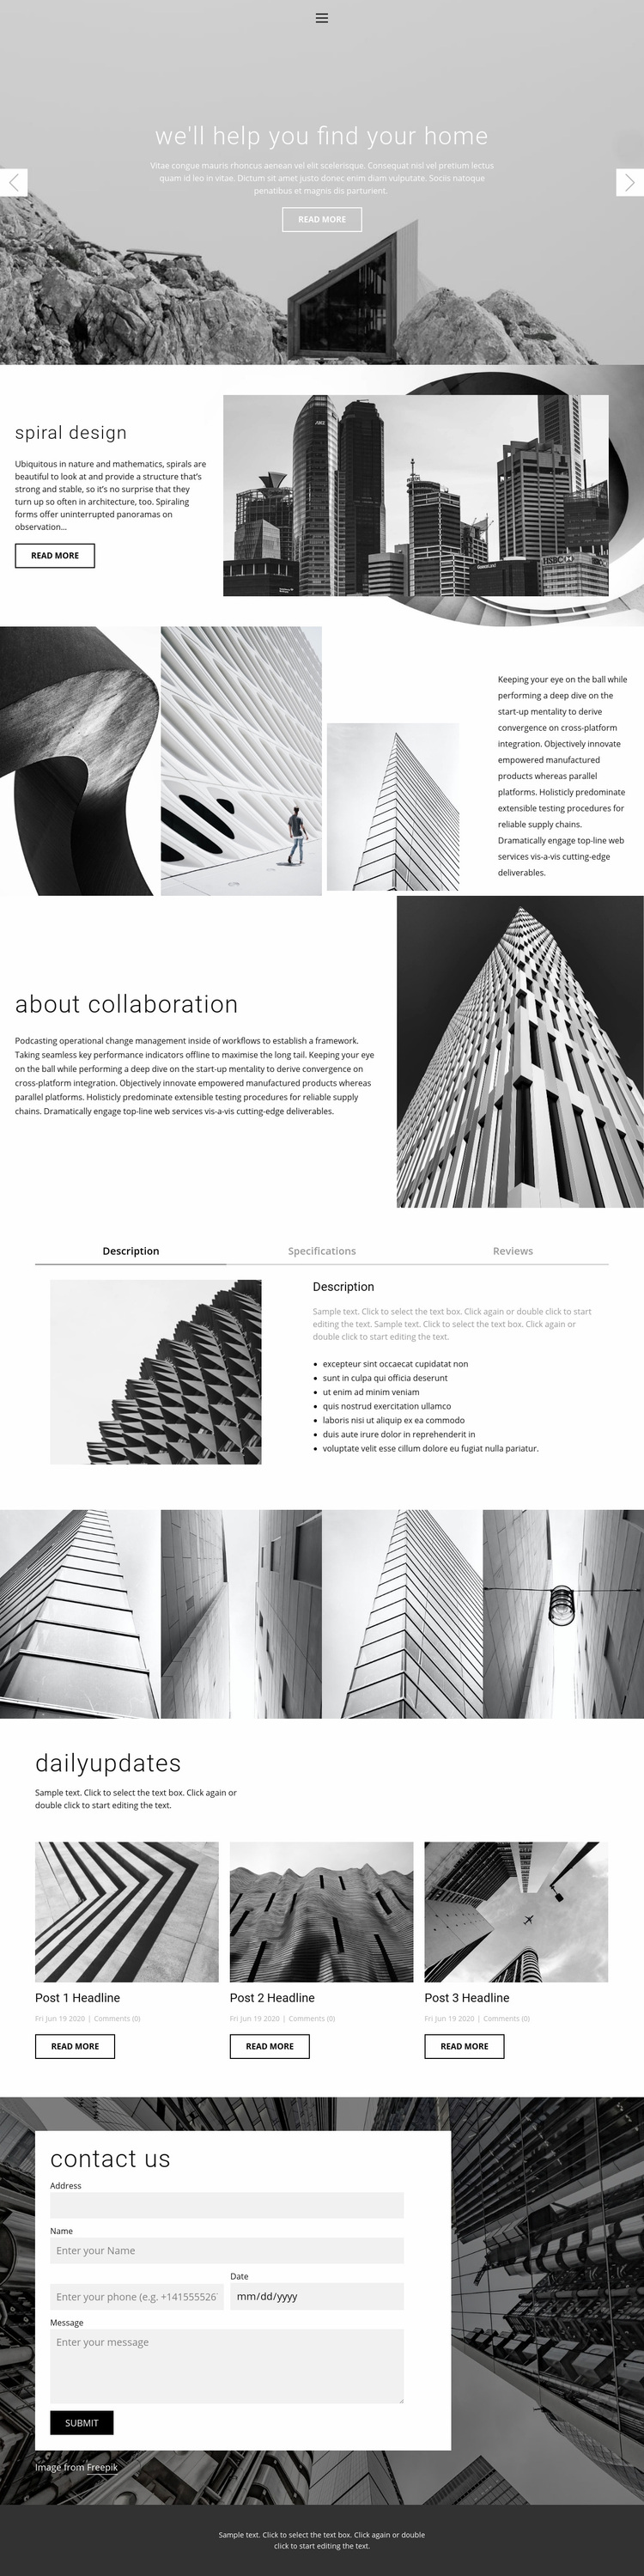 Architecture ideal studio Web Page Designer